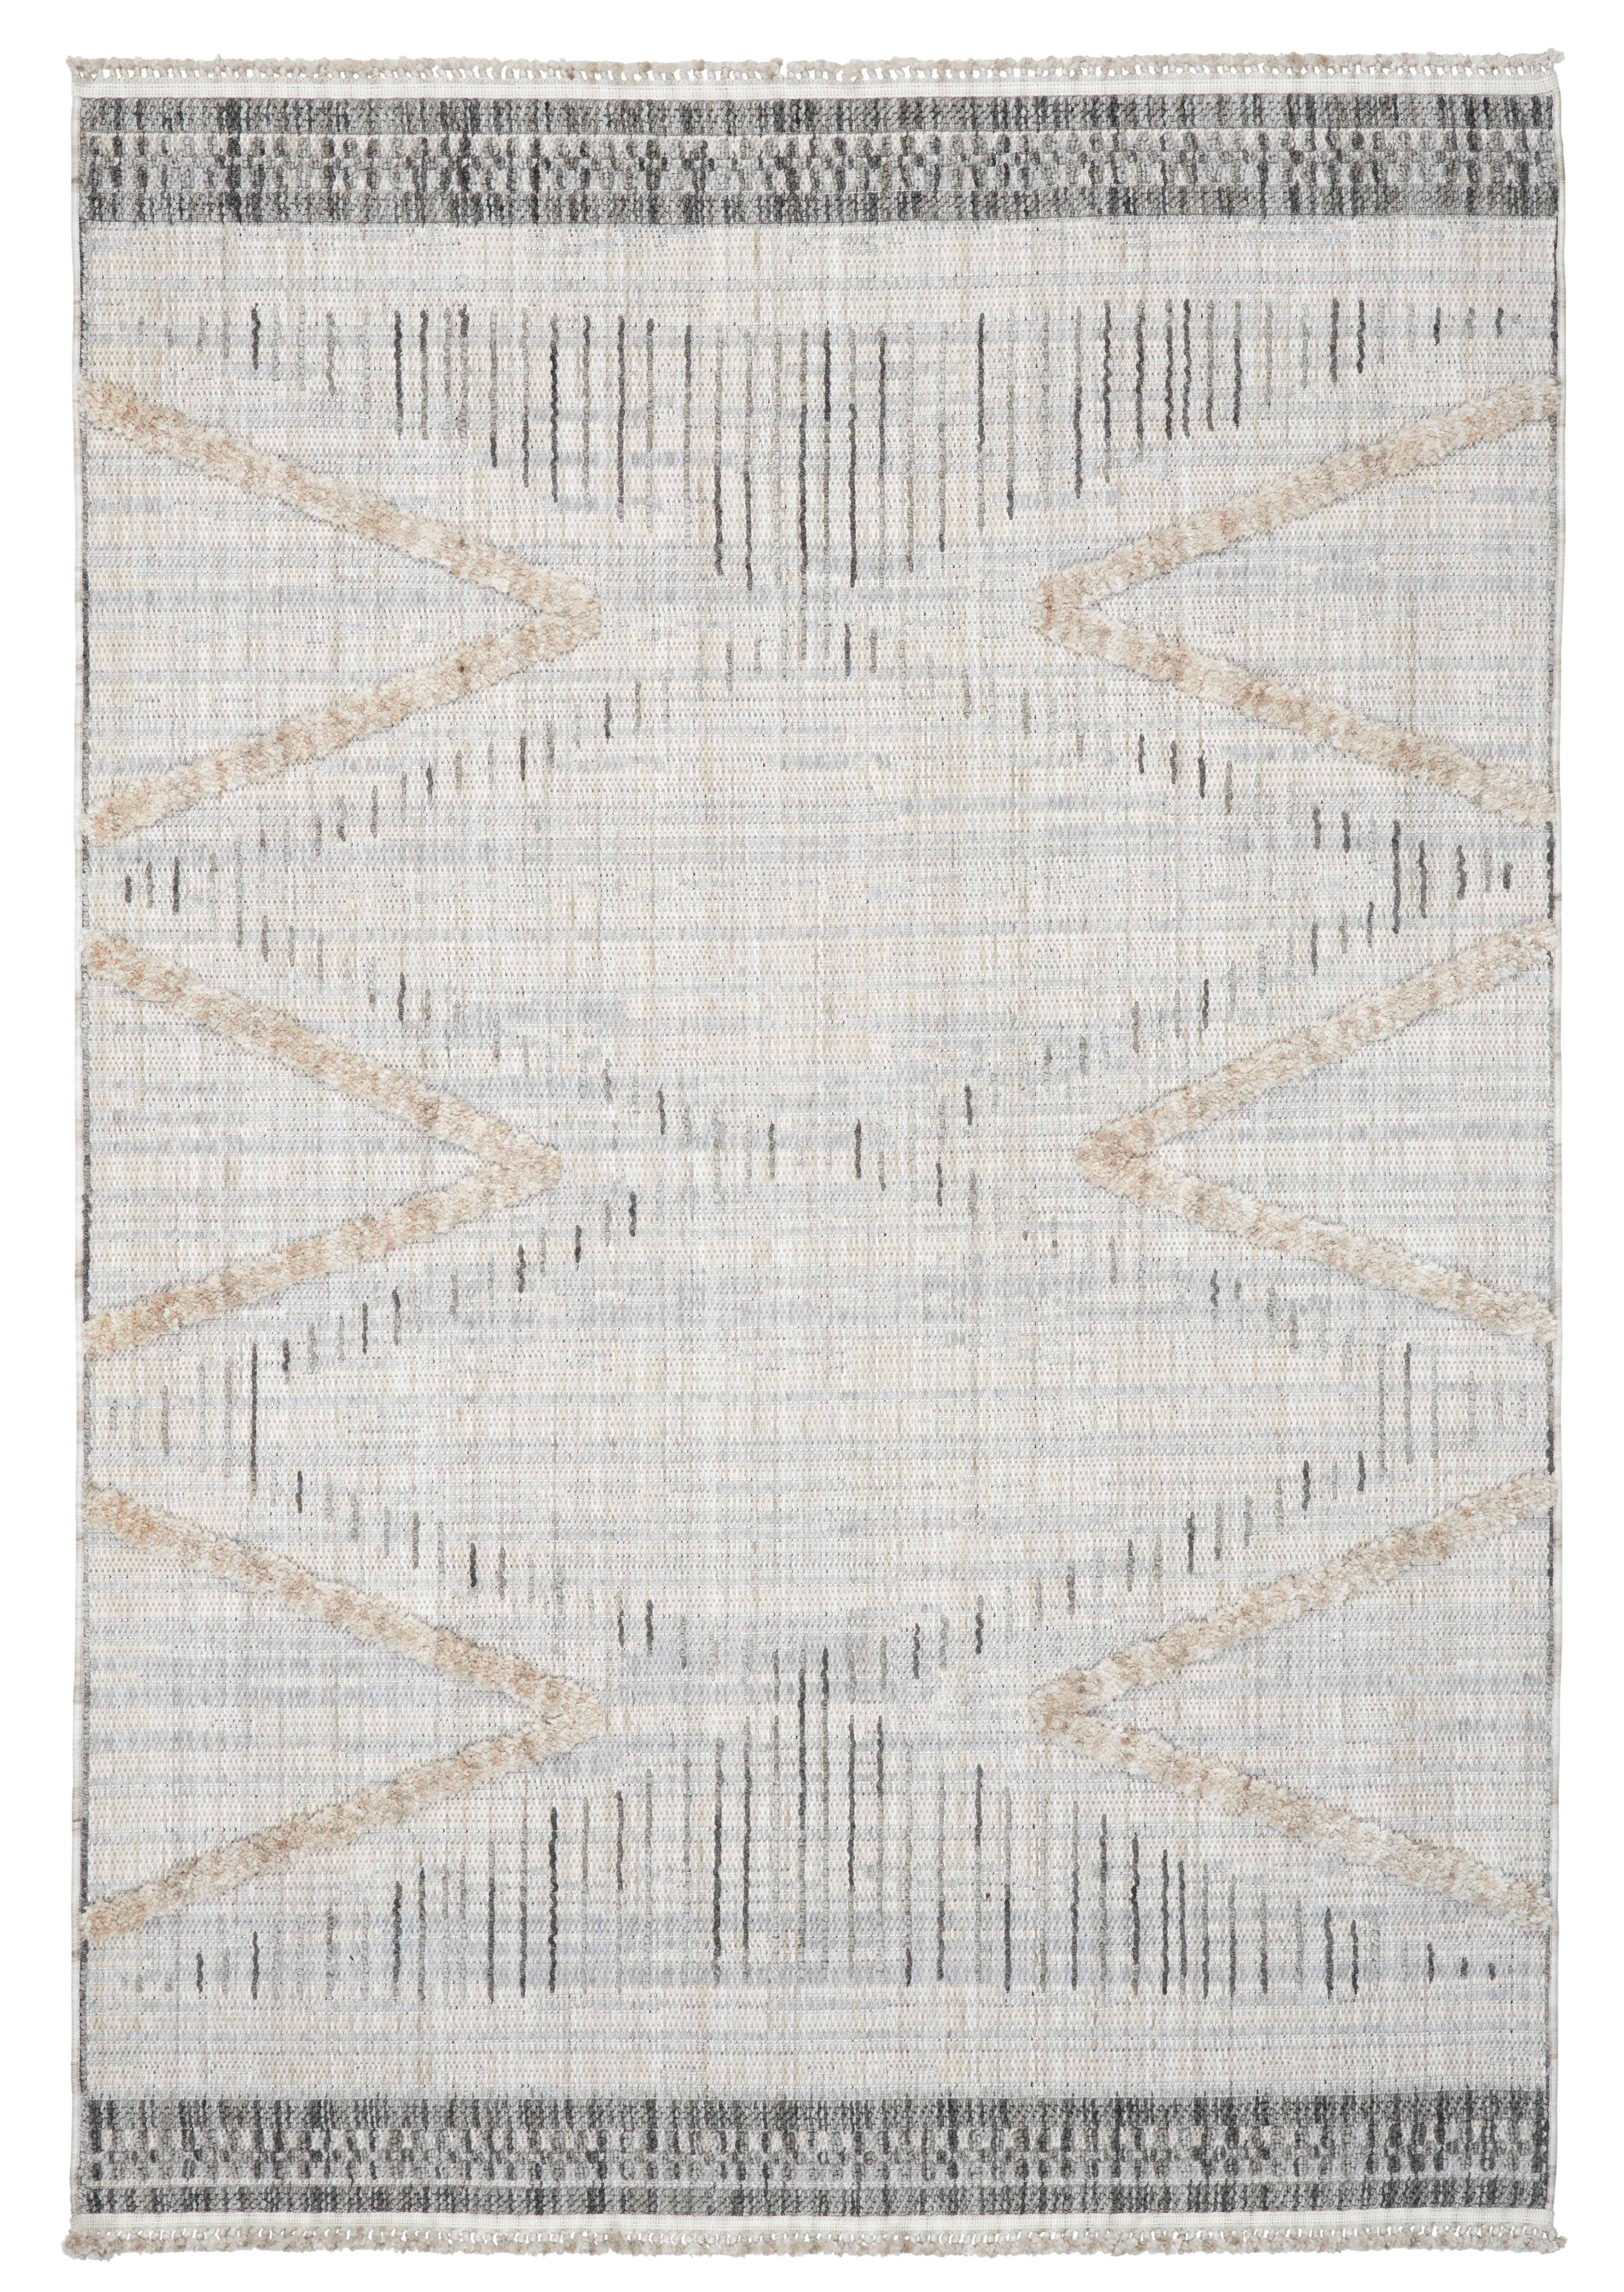 Tepih Niskog Tkanja Valencia - siva/antracit, Modern, tekstil (80/150cm) - Modern Living